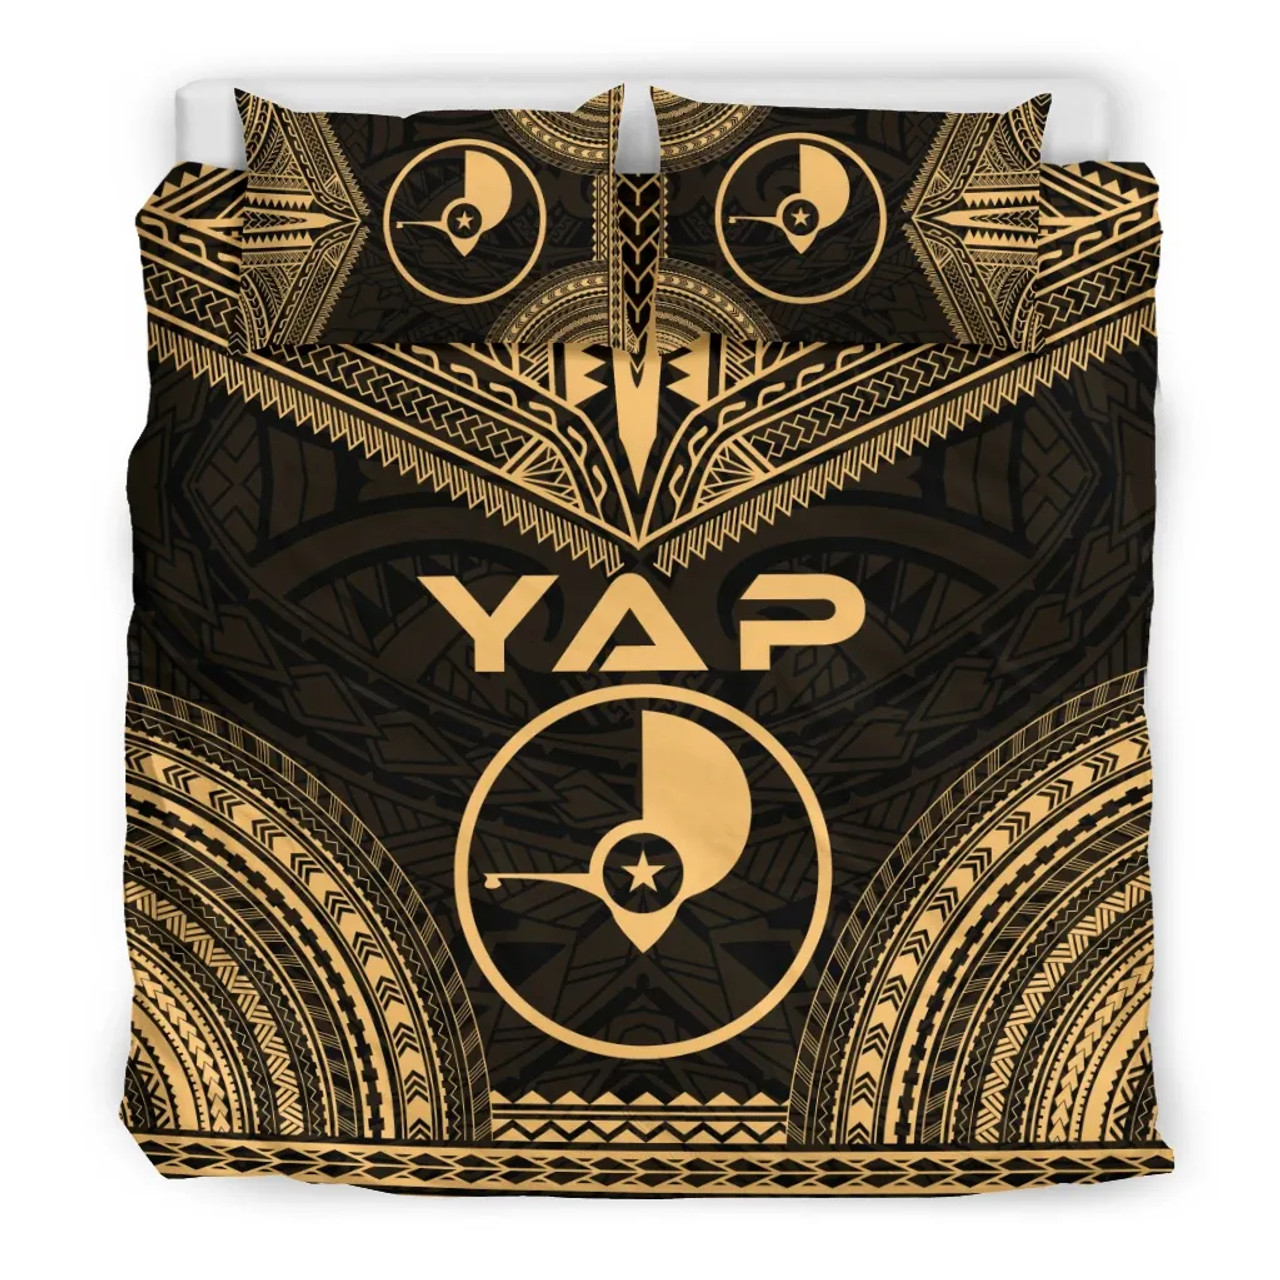 Yap Polynesian Chief Duvet Cover Set - Gold Version 3